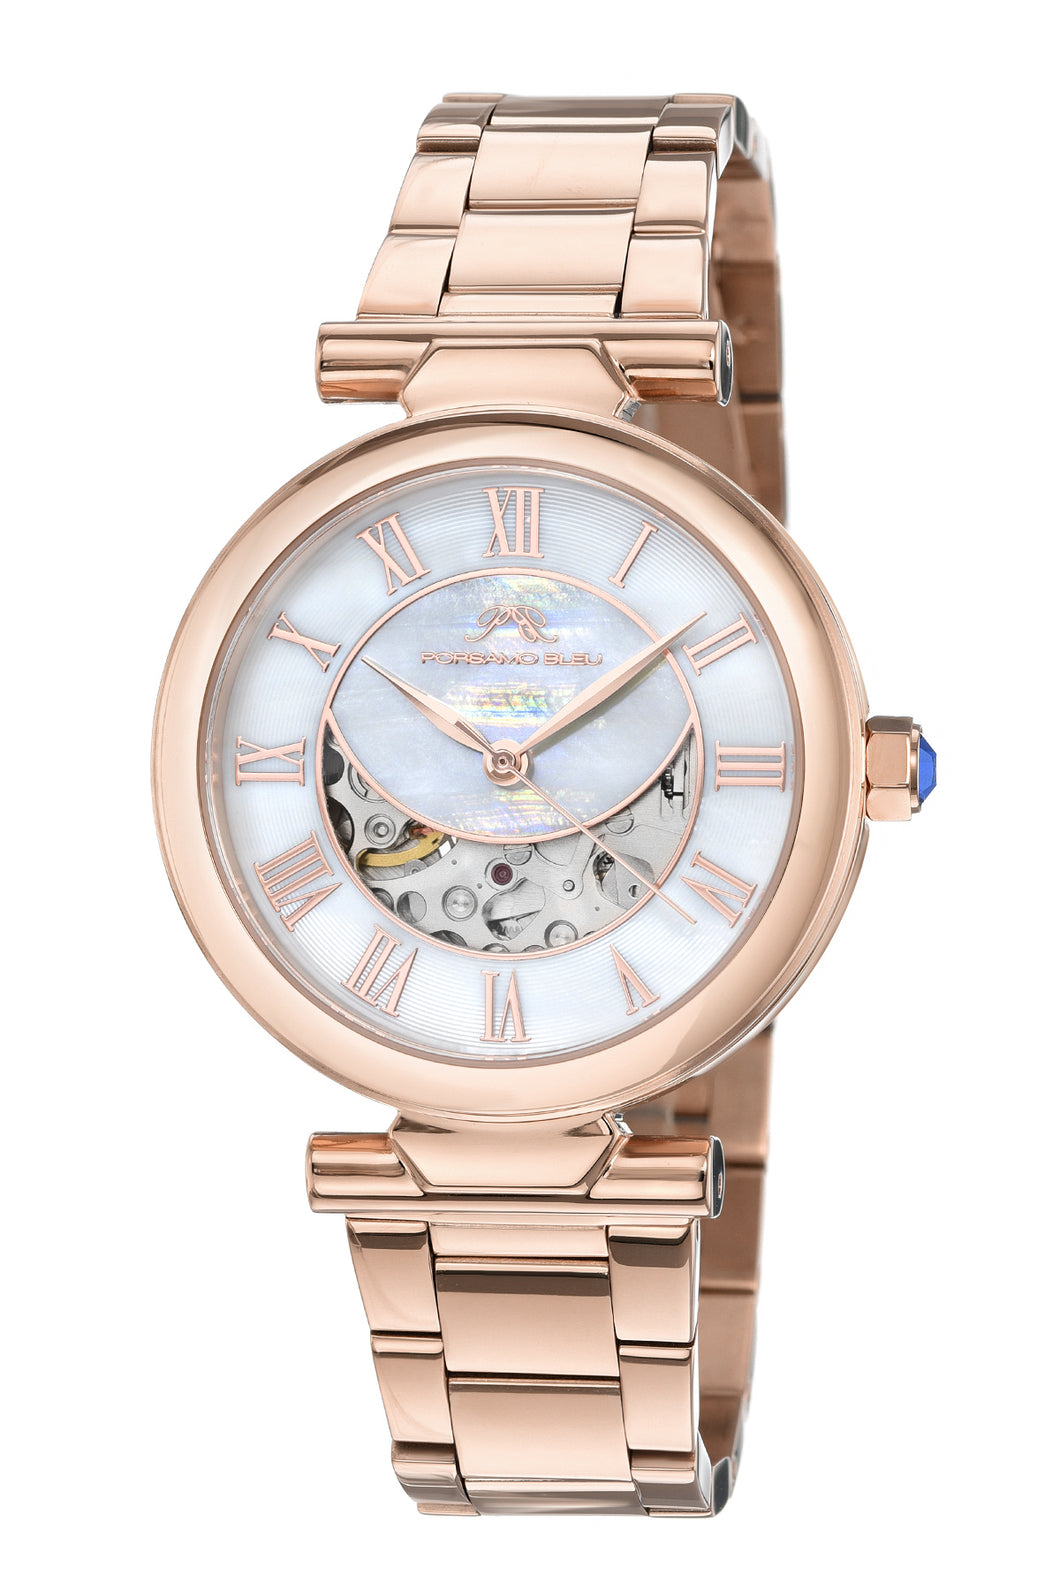 Colette Women's Automatic Rosetone Bracelet Watch, 1101CCOS